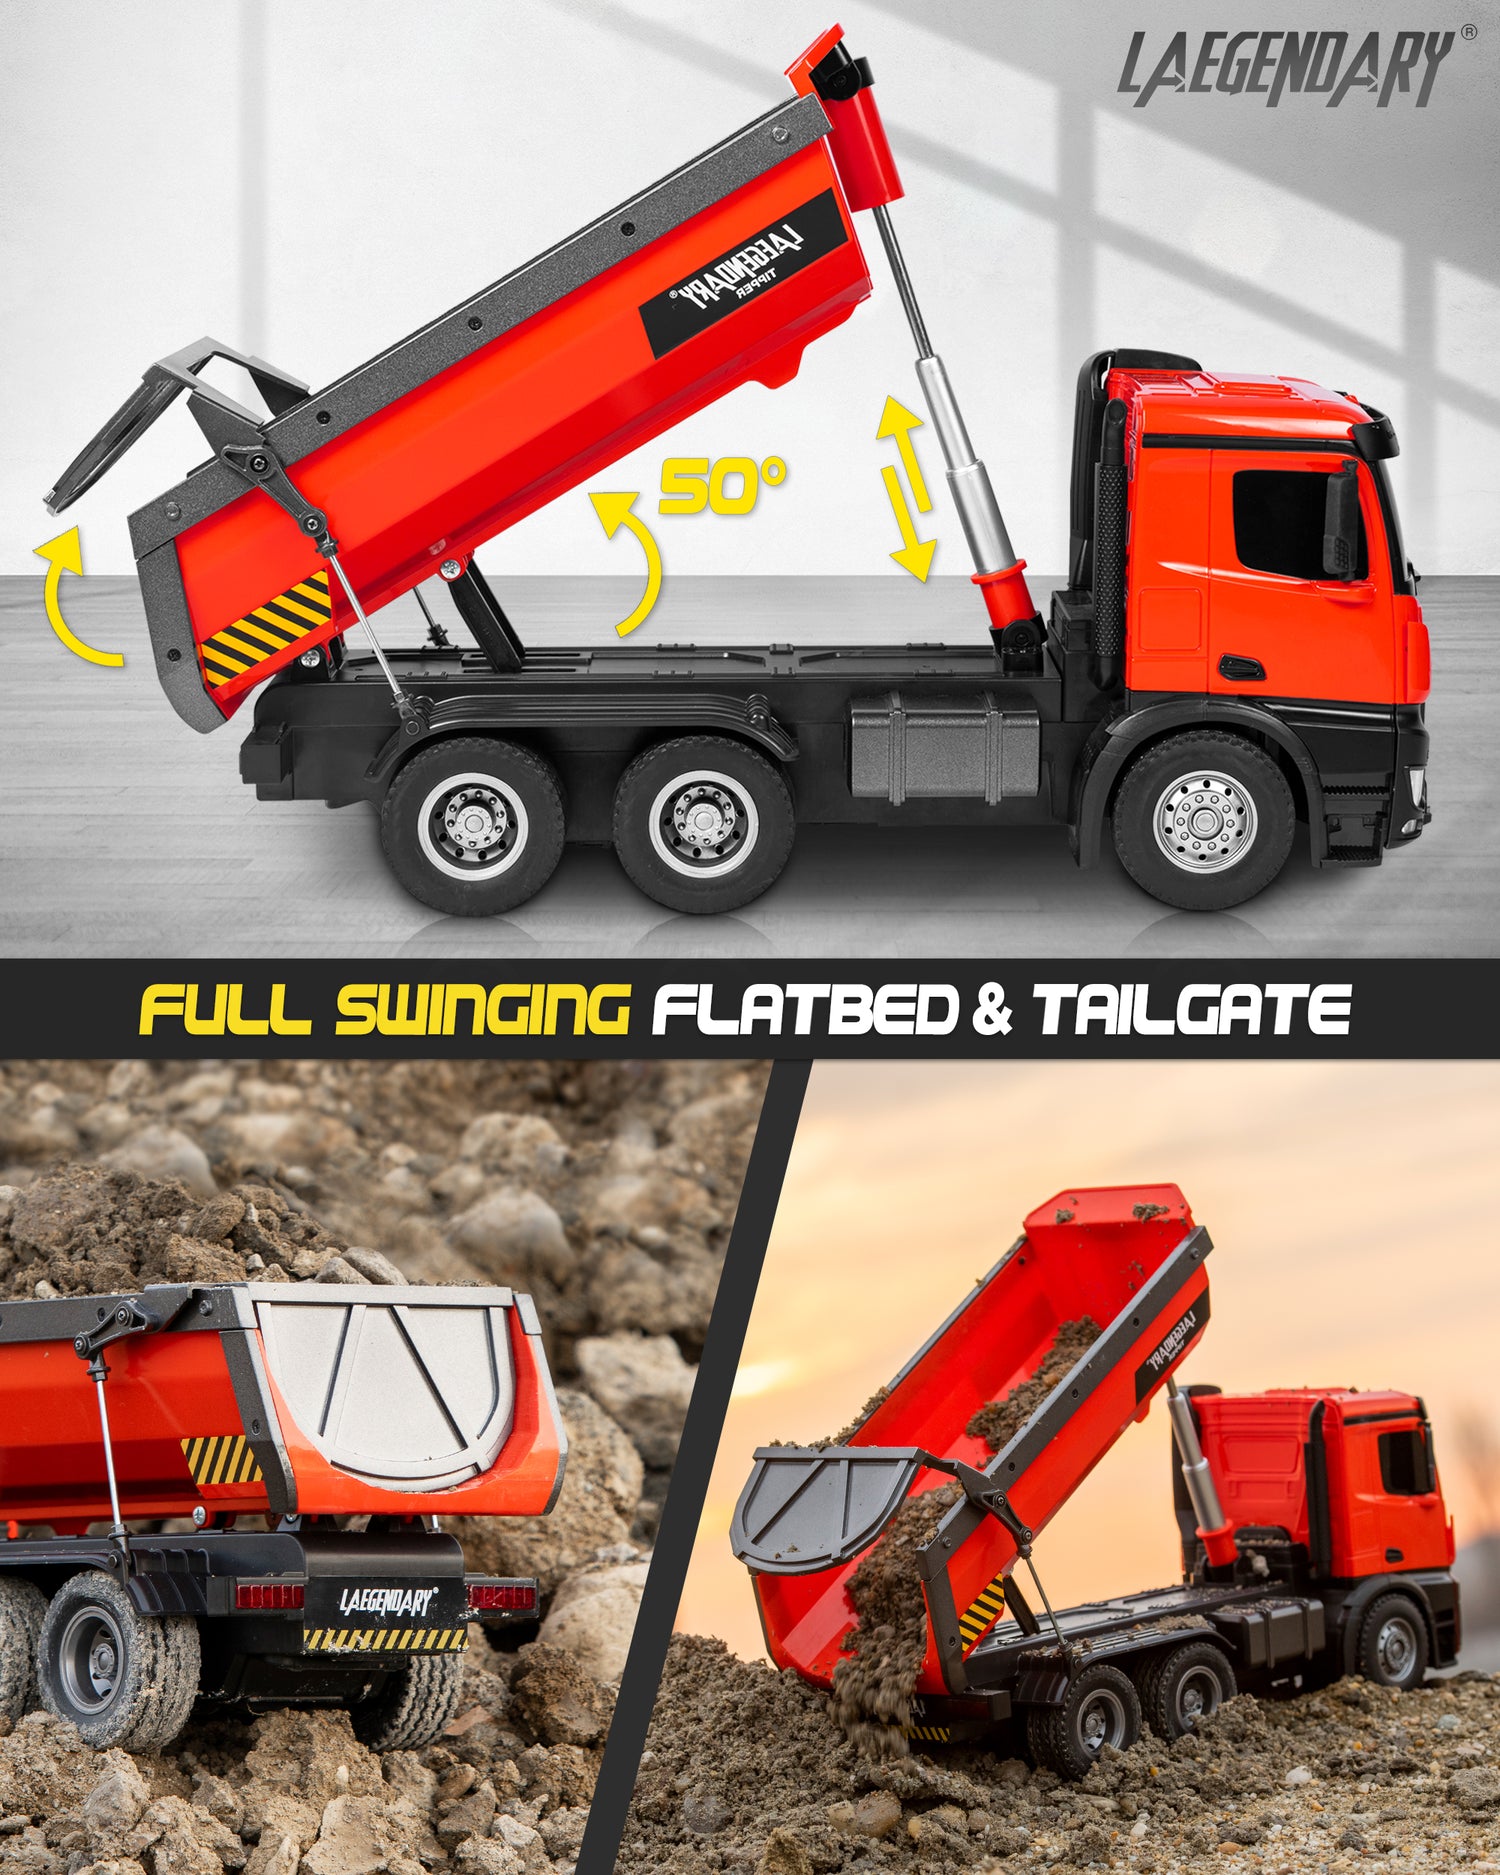 Double E 1/14 Hydraulic RC Dump Truck 6x6 FMX Remote Control Dumper Ca –  toucanhobby